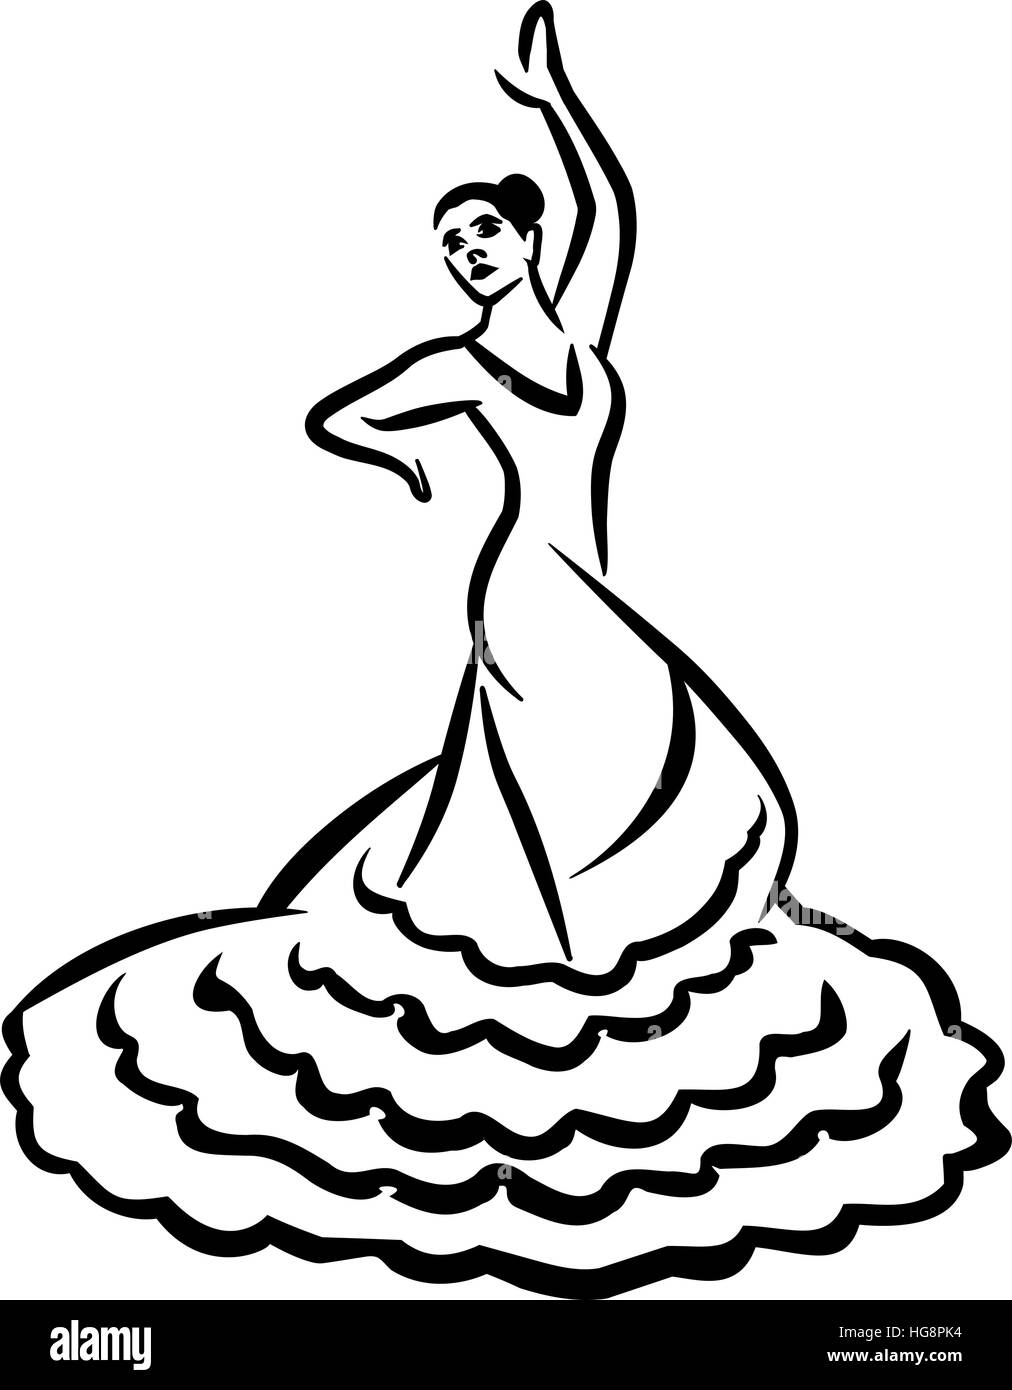 Ballerino latino Immagini Vettoriali Stock - Alamy